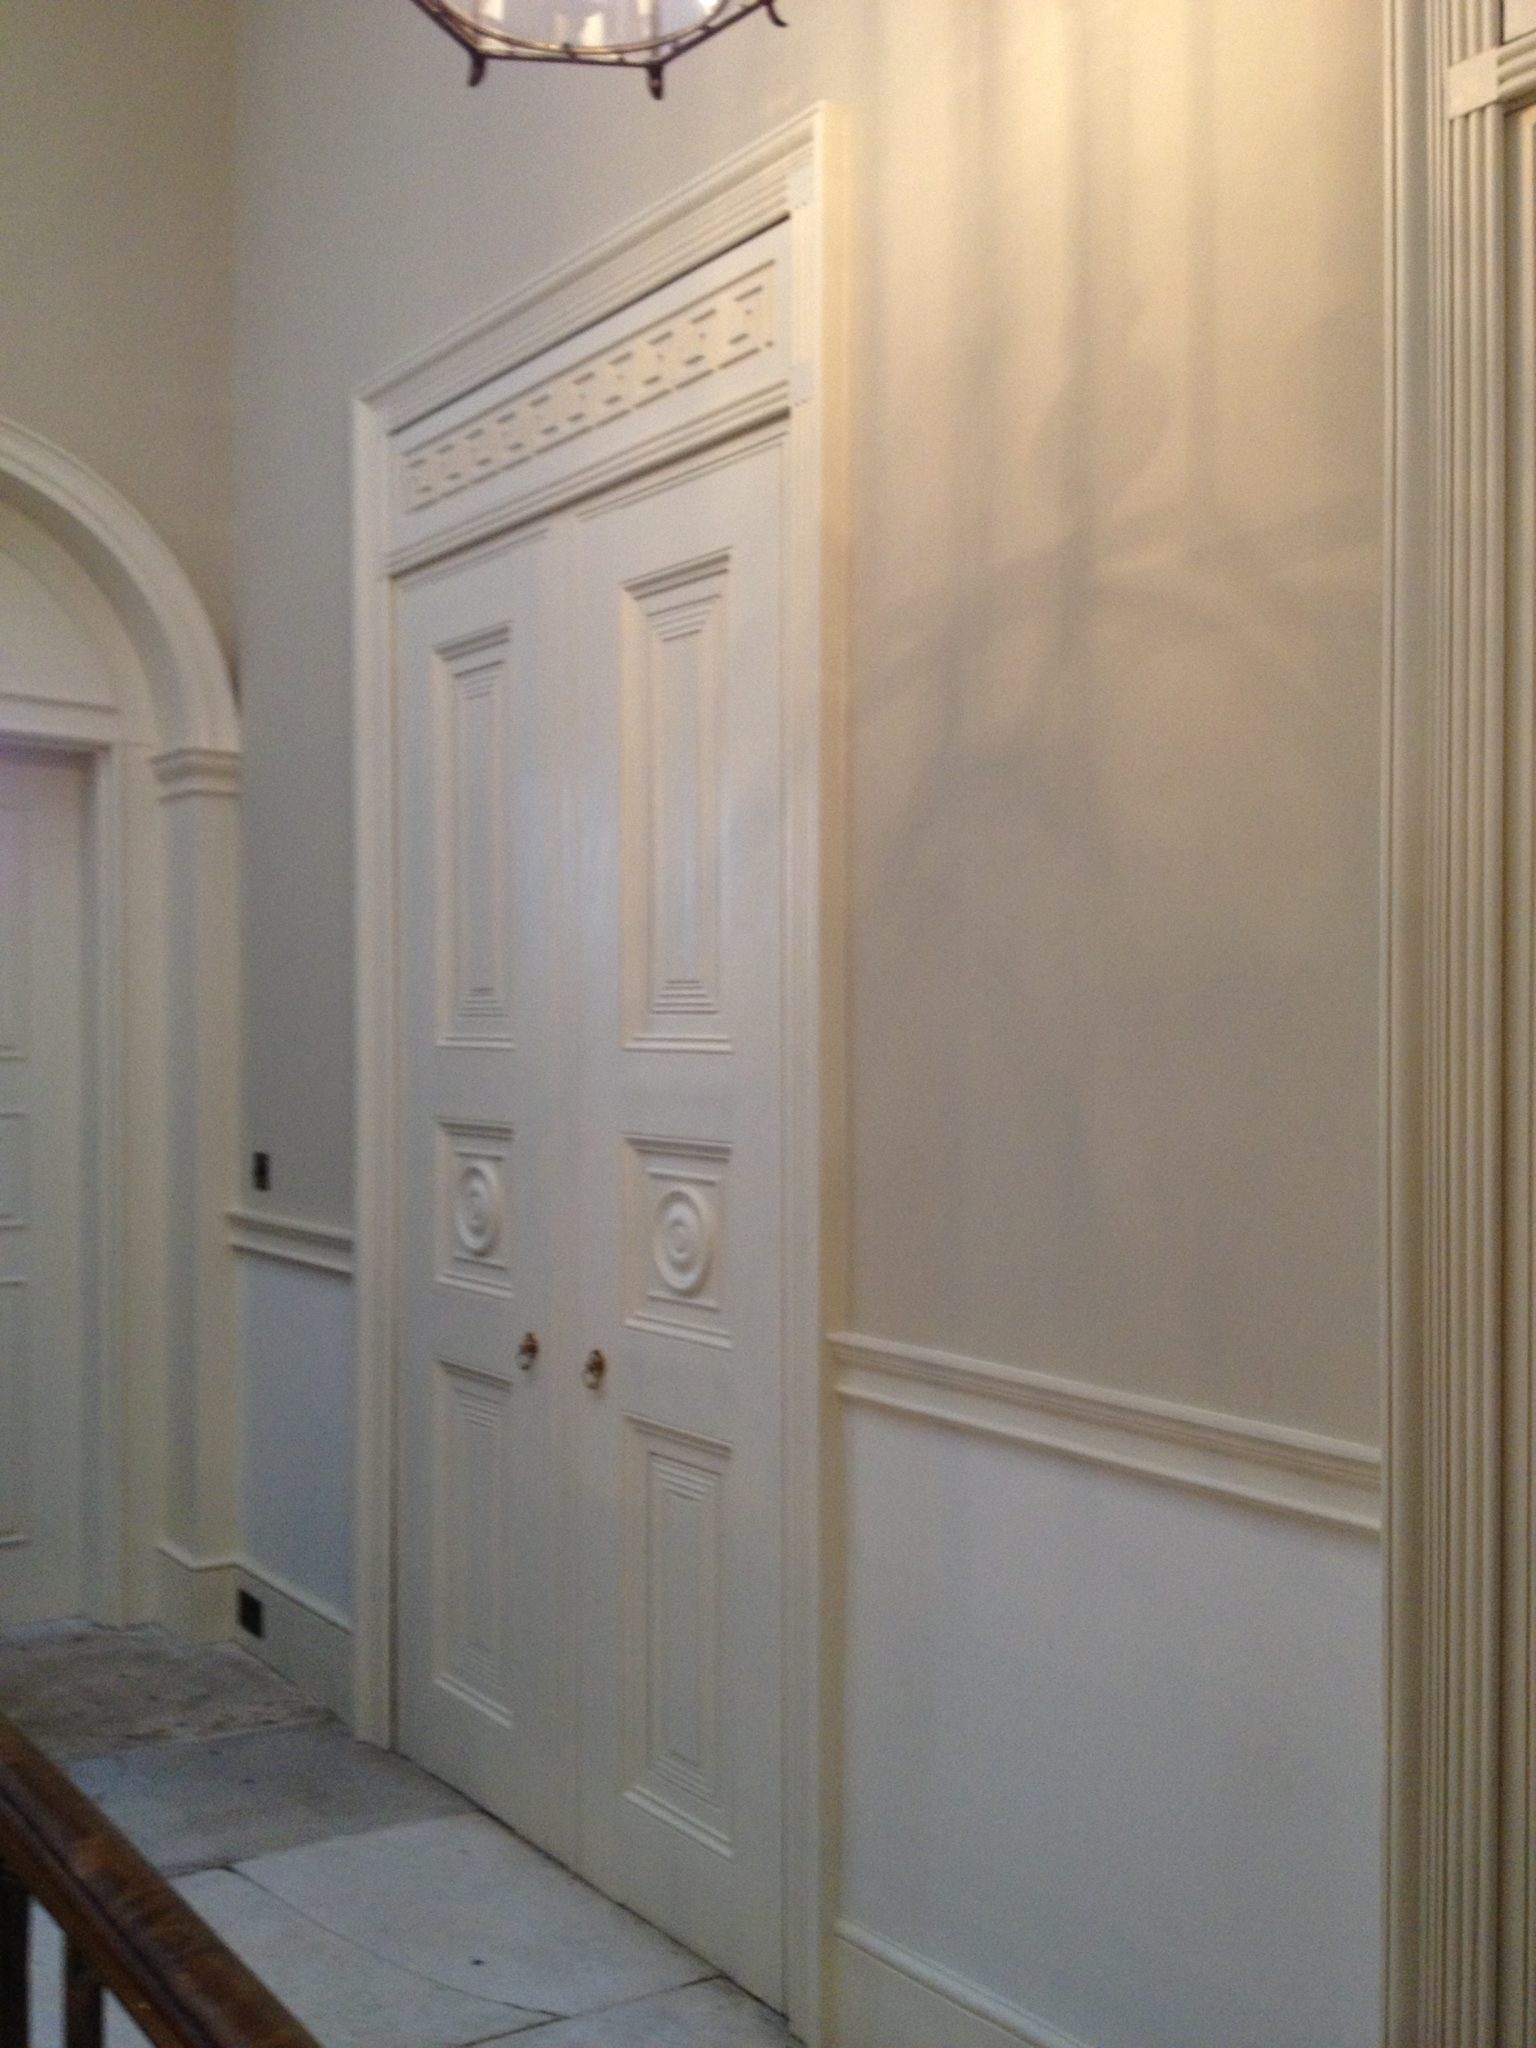 Gorgeous restoration doors with elegant Greek motif